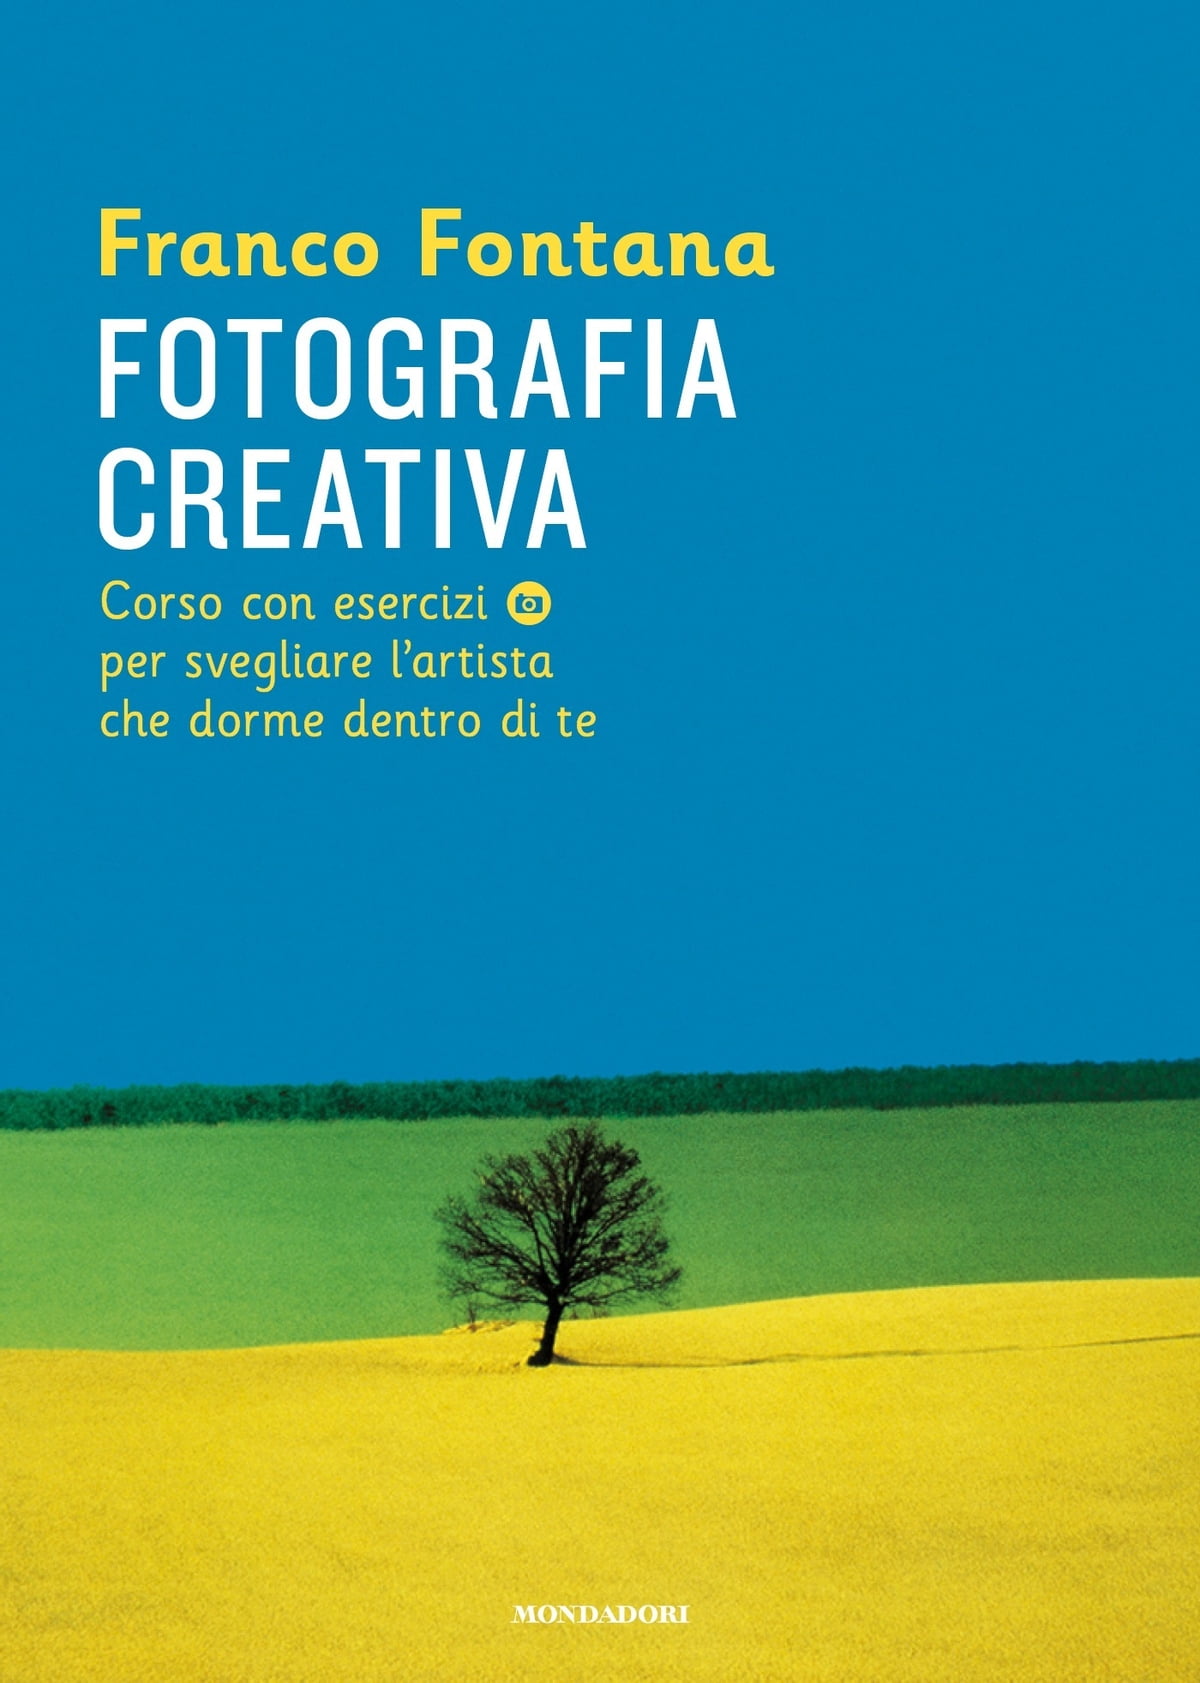 Fotografia creativa (EBook, italiano language, Mondadori)